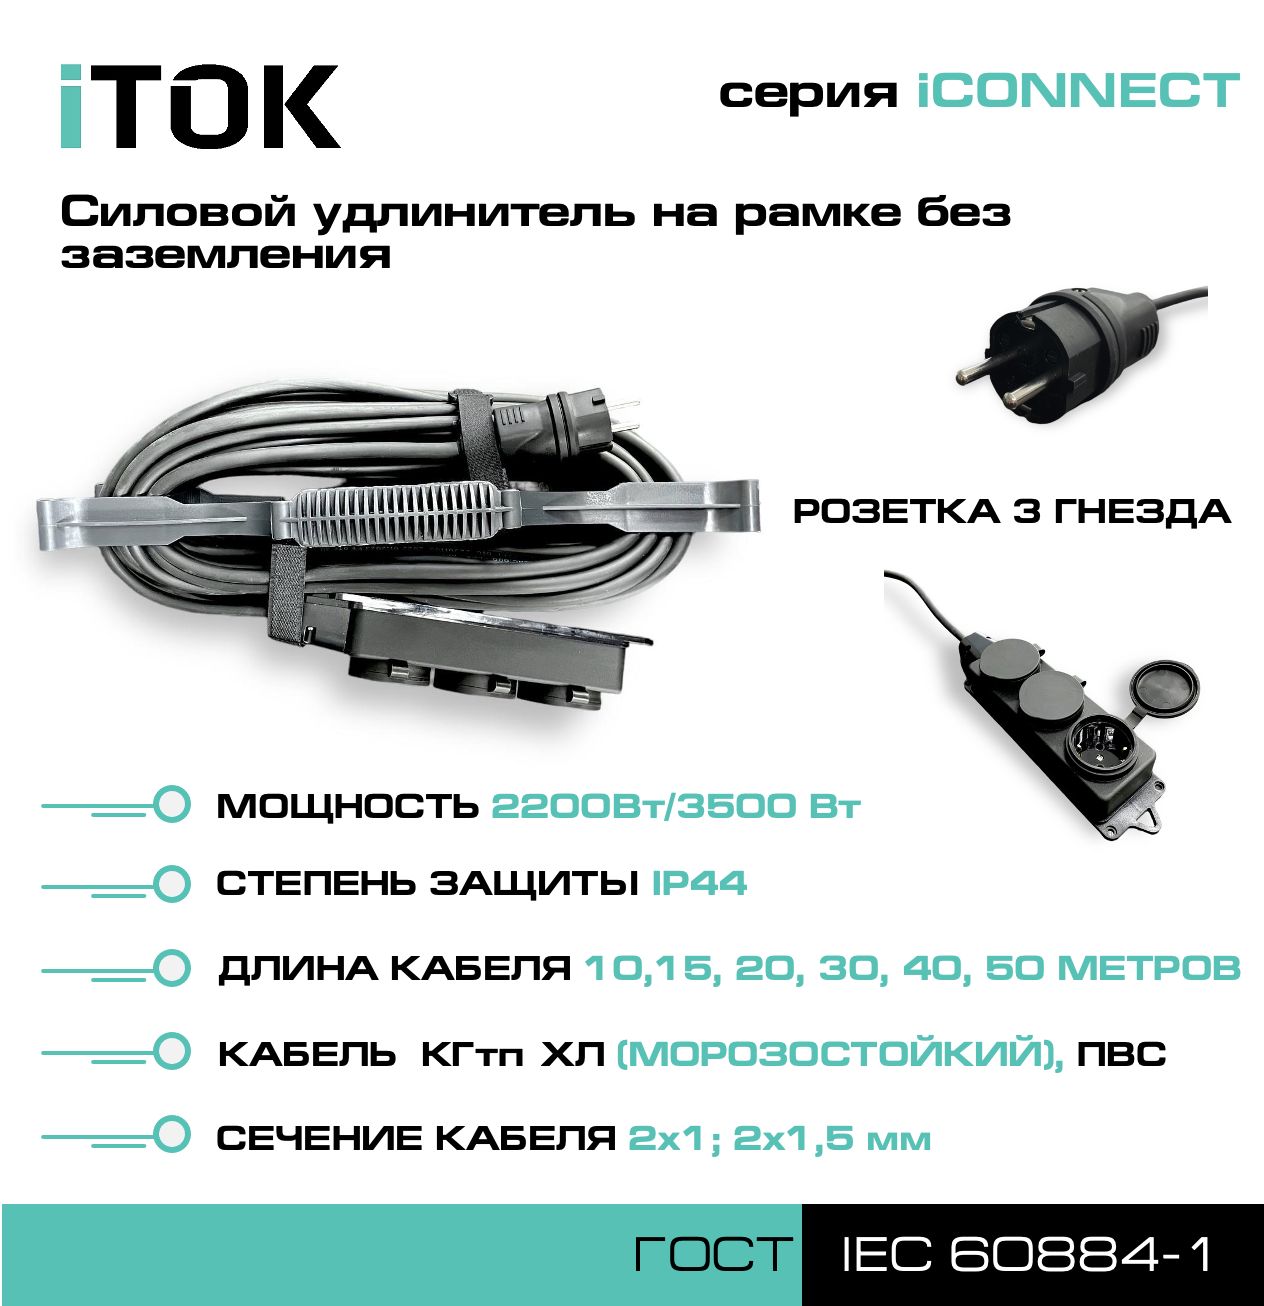 Удлинитель на рамке без земли серии iTOK iCONNECT ПВС 2х1,5 мм 3 гнезда IP44 20 м